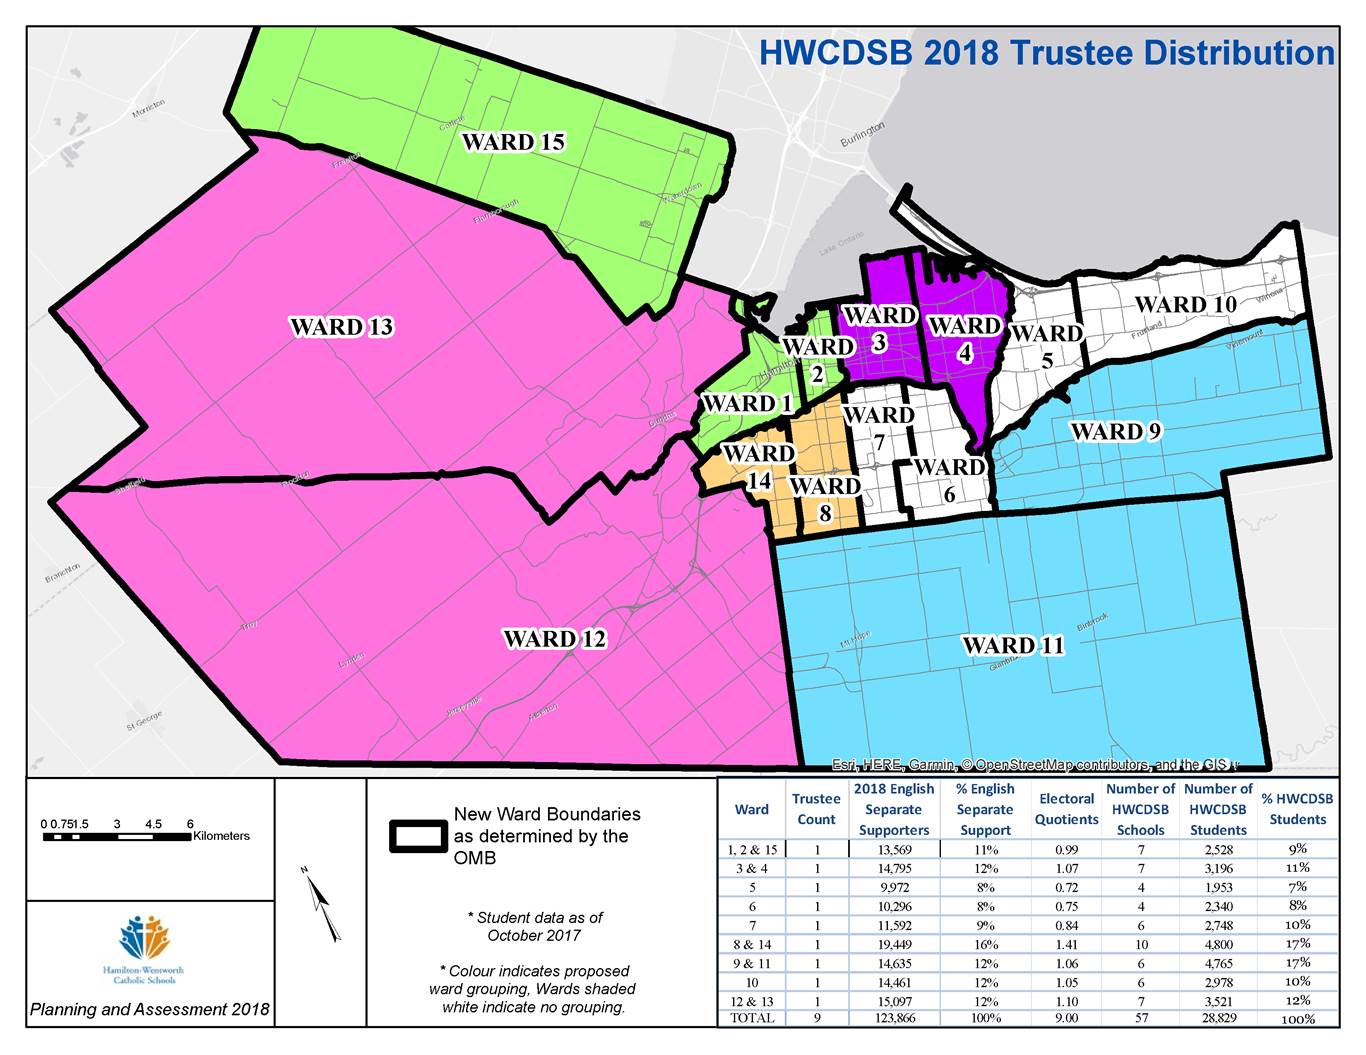 HWCDSB Trustee Distribution Map